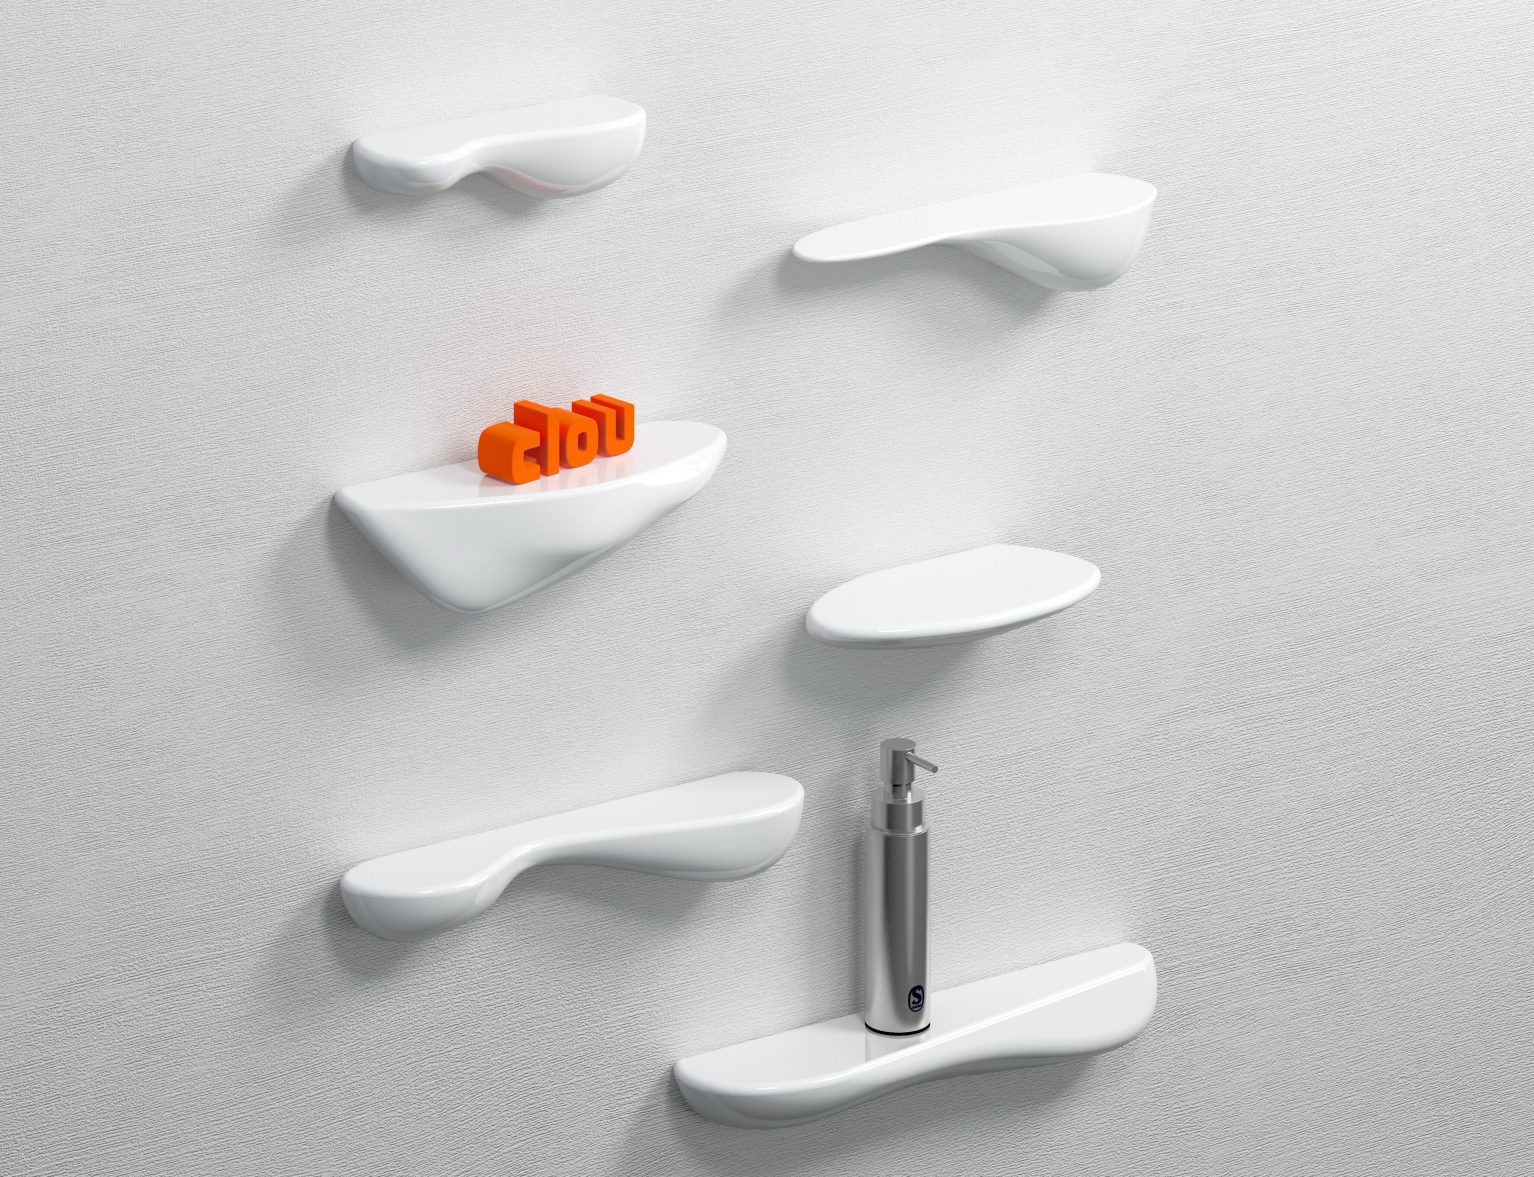 planchet-accessoires-wit-keramiek-toilet-badkamer-luxe-sanitair-Cliff-clou-klein-plankje-planchetje-Sp-shadow-logo-zeepdispenser